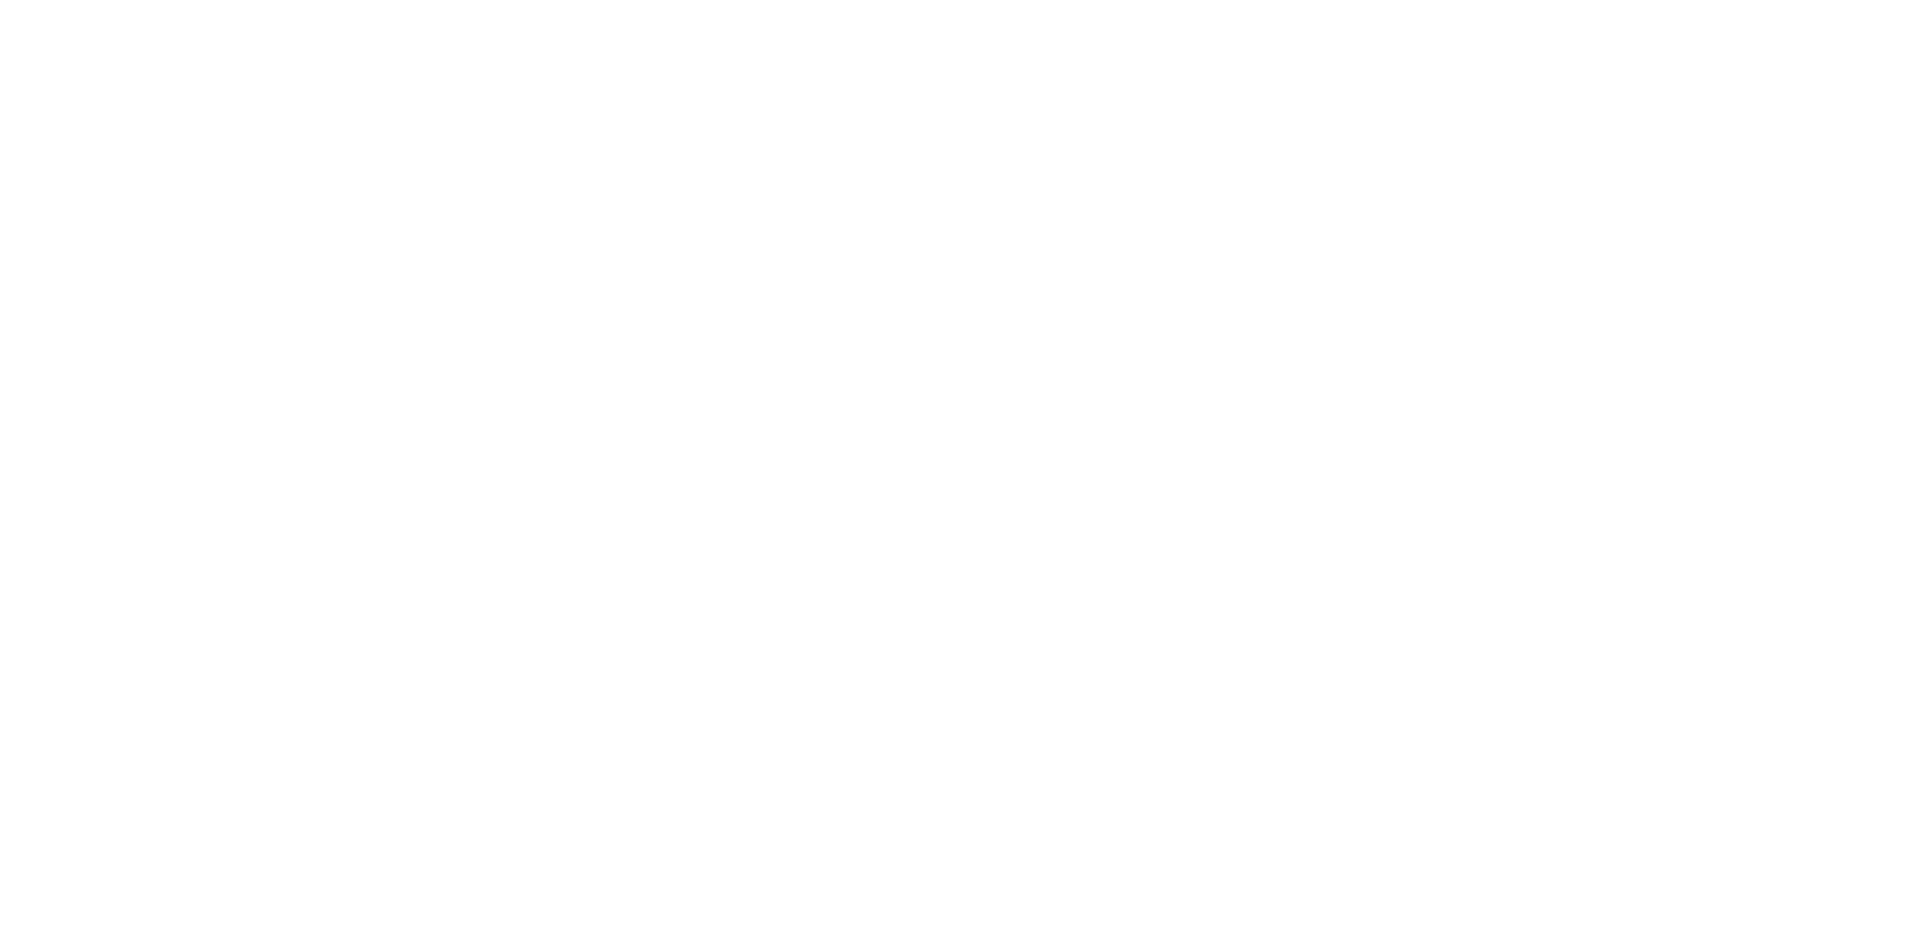 the healthy habits Stockton logo in white